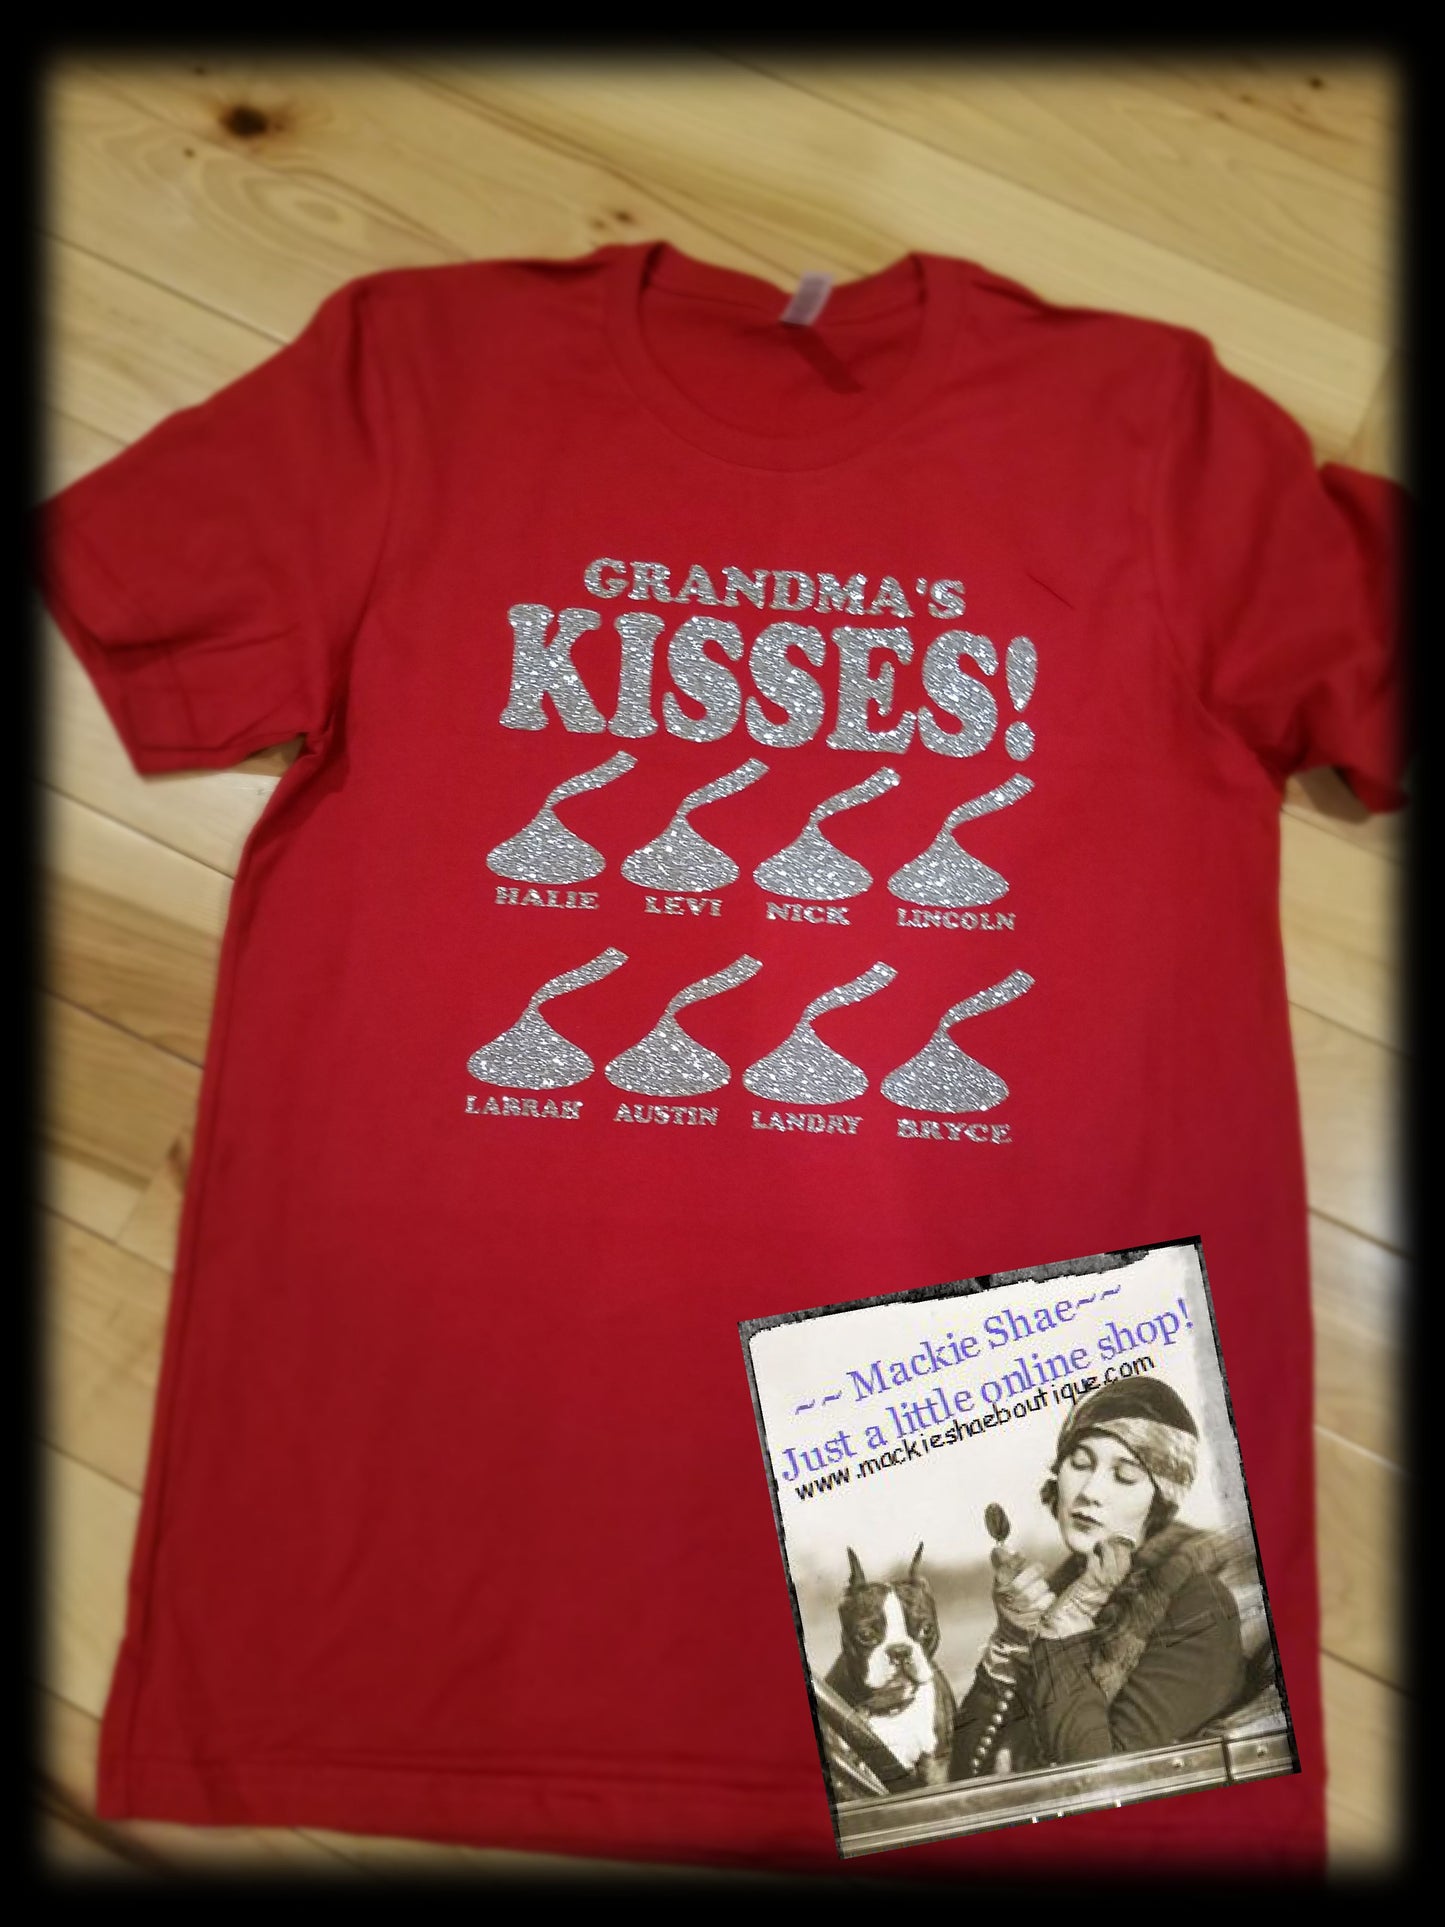 Grandma's Kisses! Personalized Custom Shirt (Meemaw, Granny, Etc), Short Sleeve